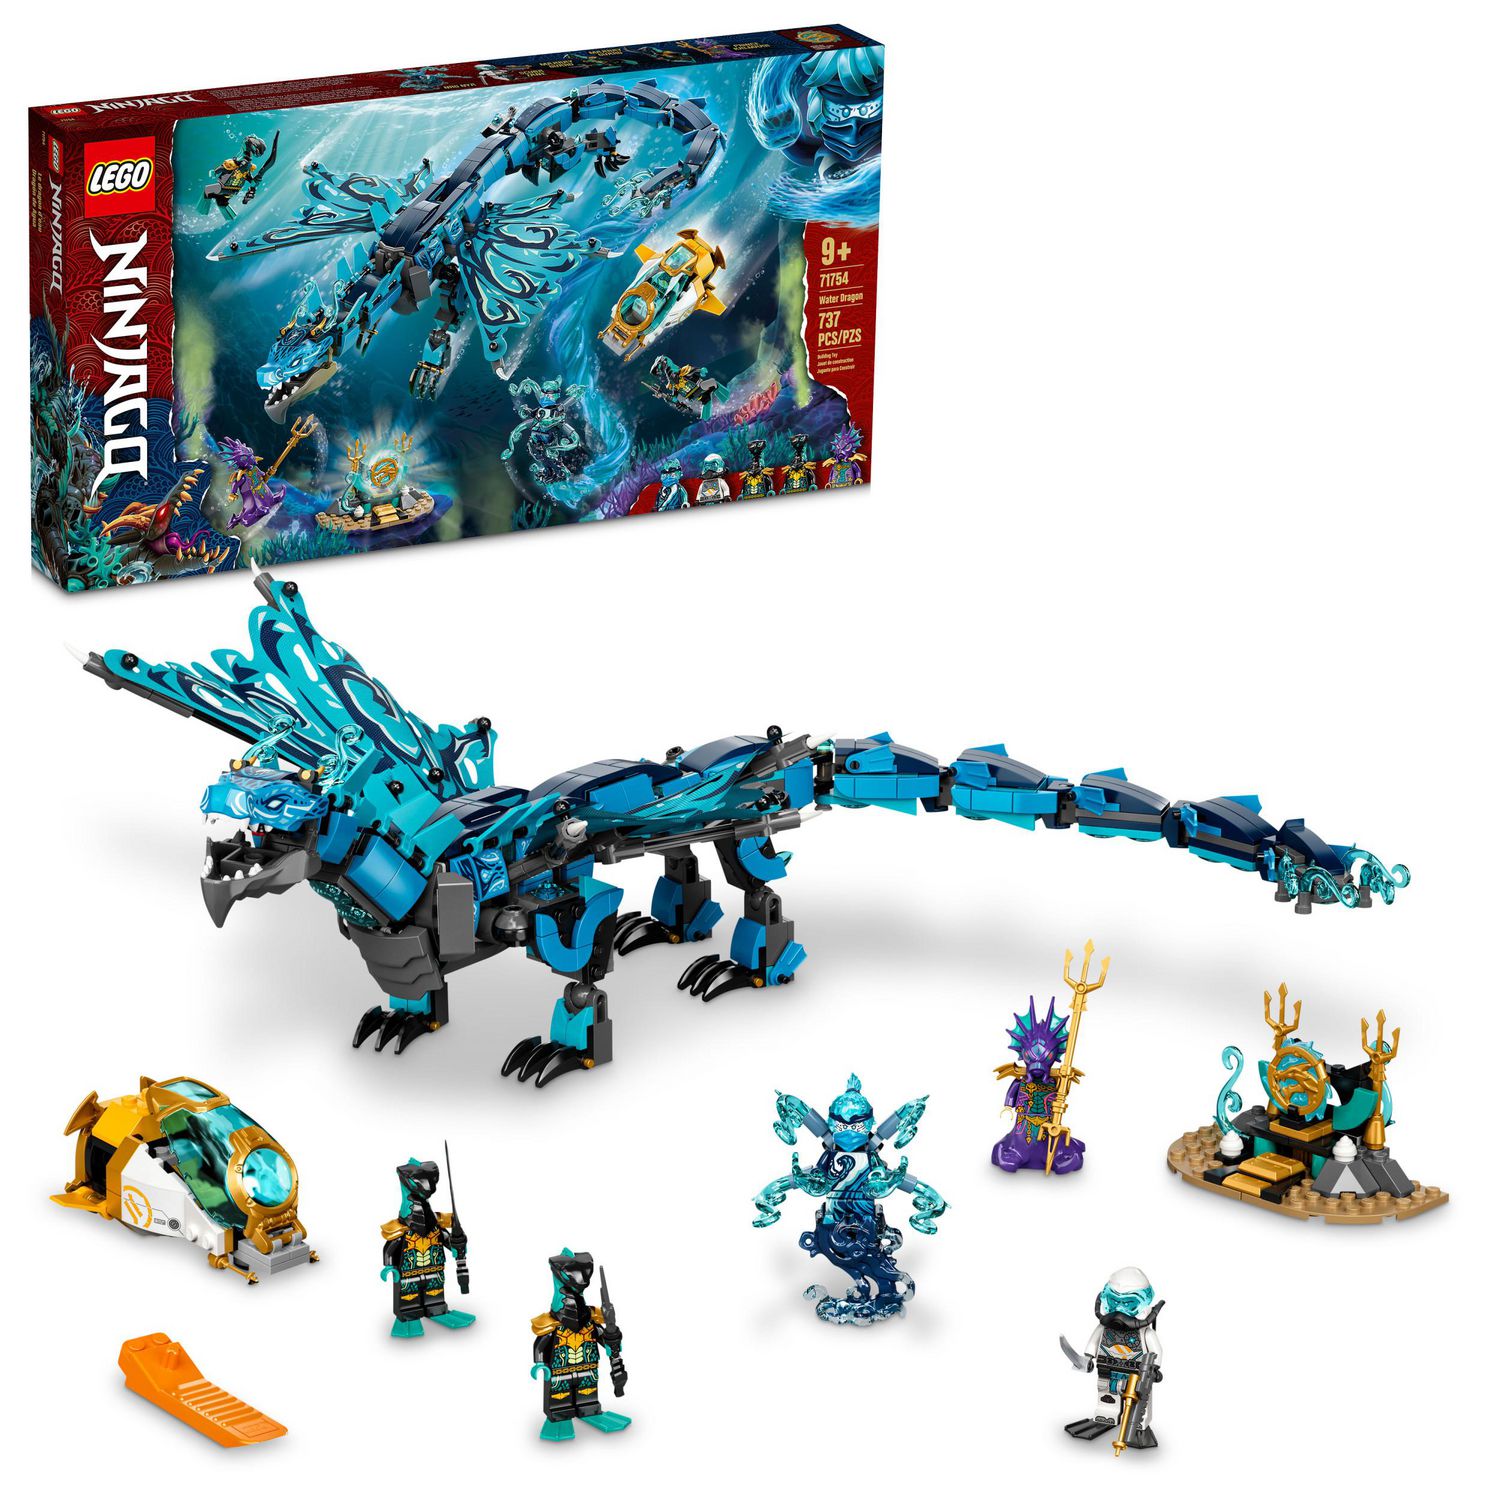 LEGO NINJAGO Water Dragon 71754 Toy Building Kit (737 Pieces)